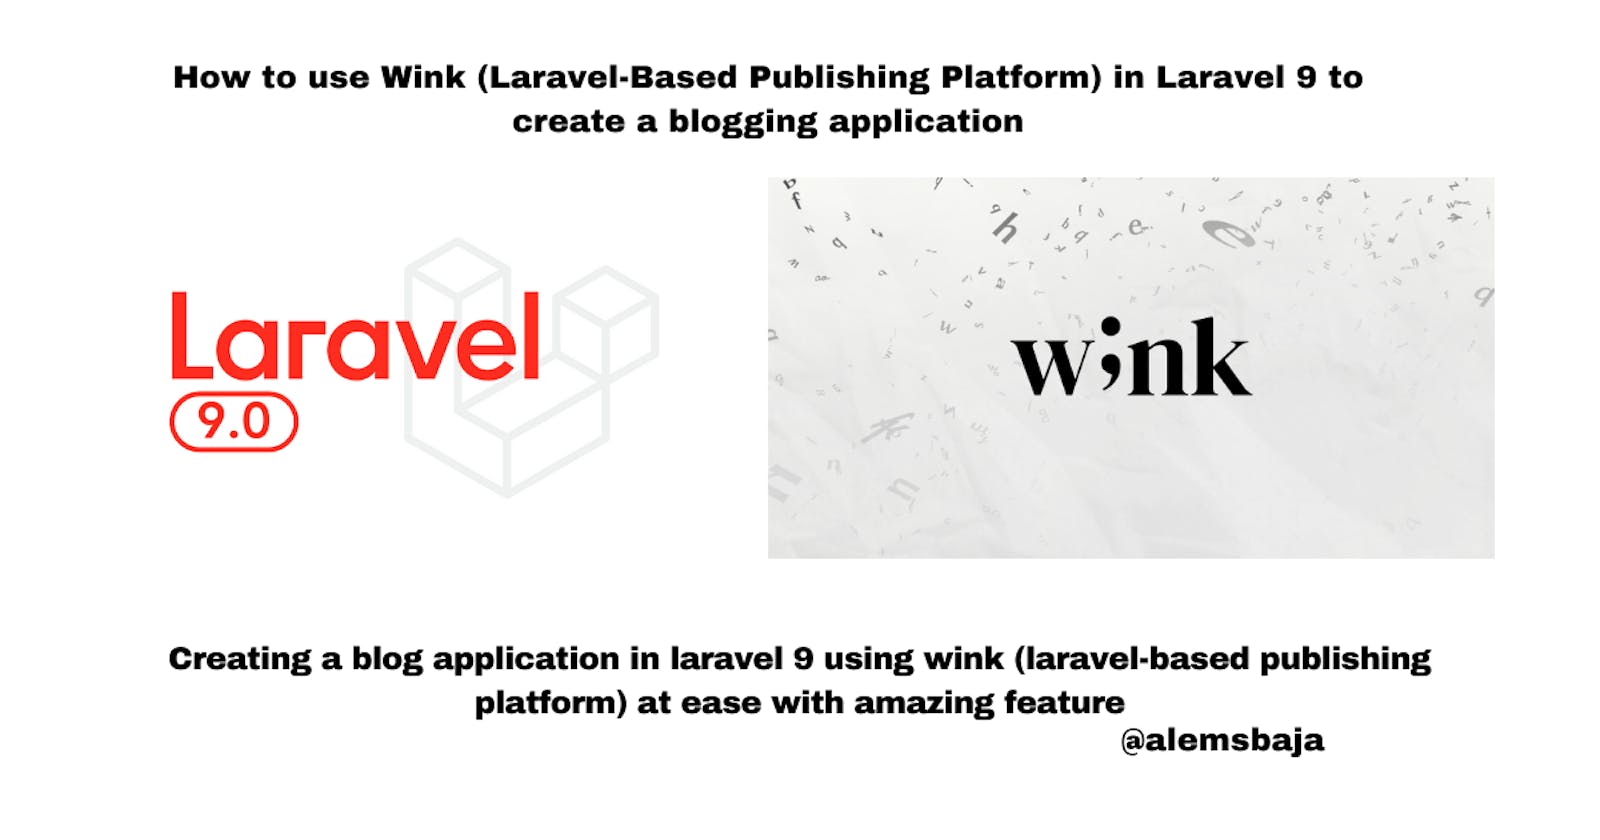 How to use Wink (Laravel-Based Publishing Platform) in Laravel 9 to create a blogging application